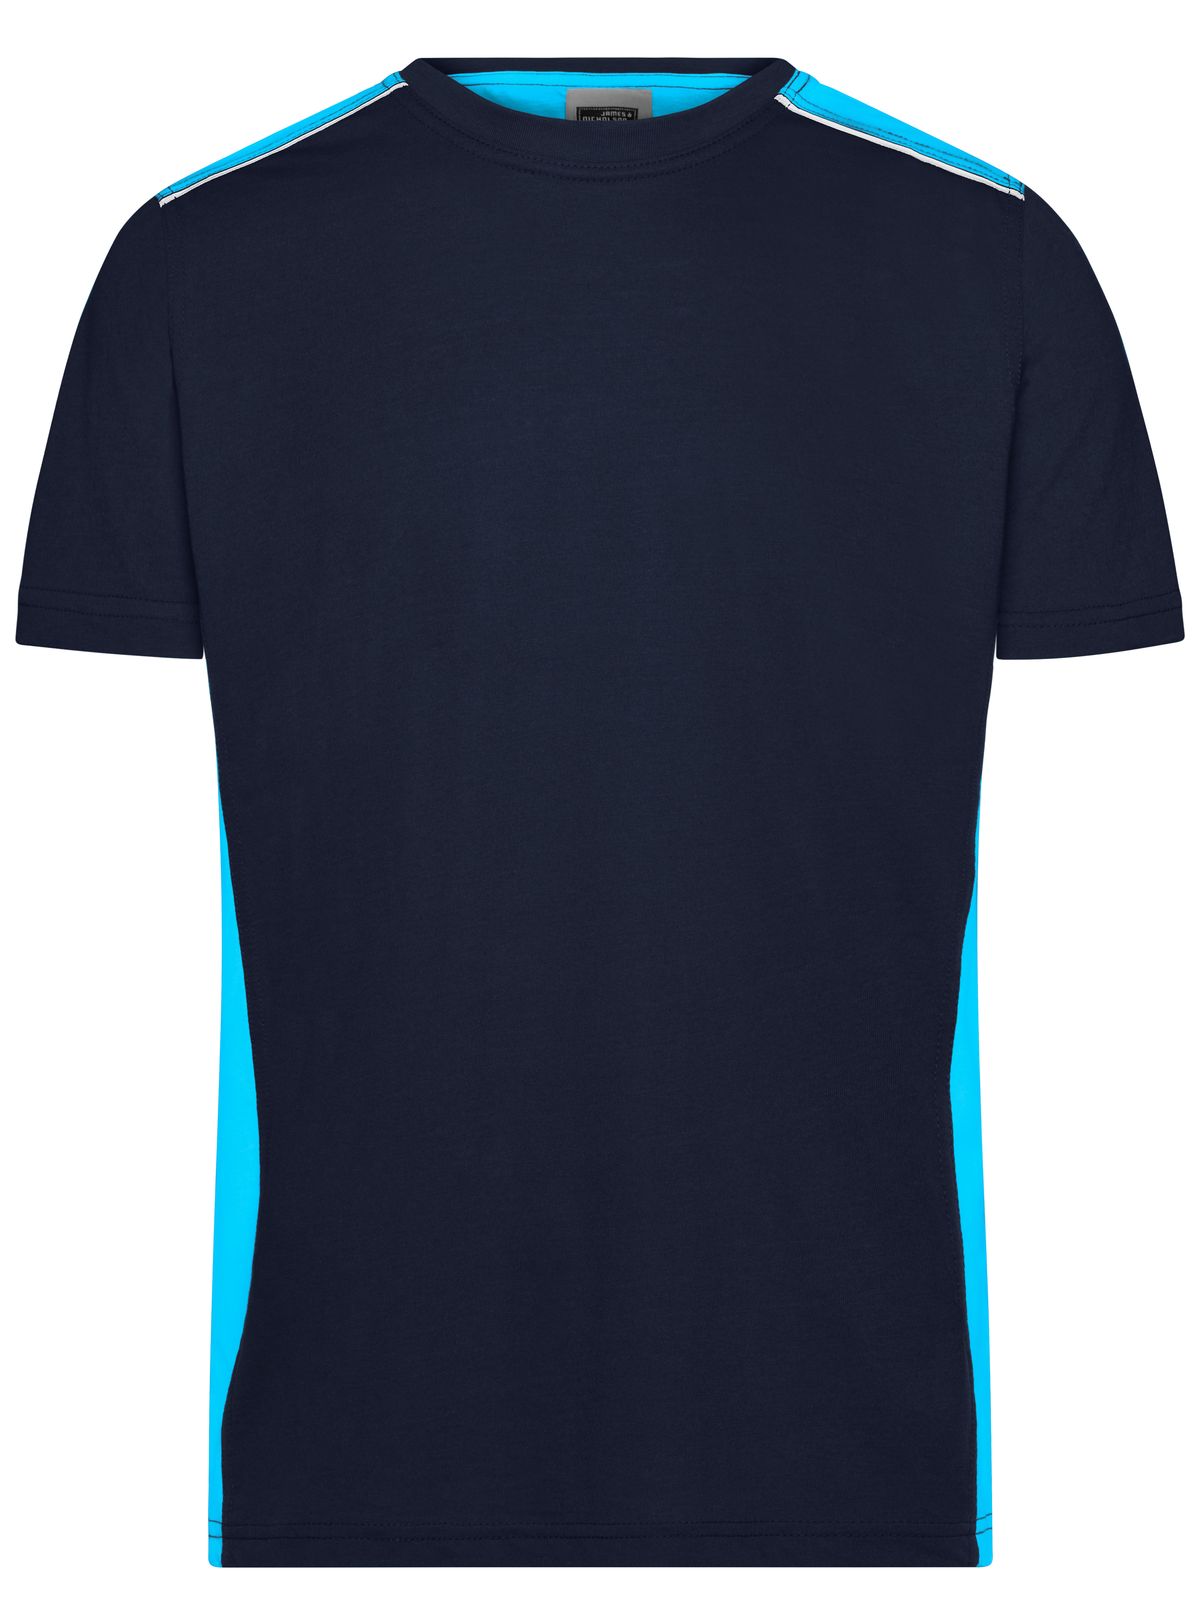 mens-workwear-t-shirt-color-navy-tourquoise.webp